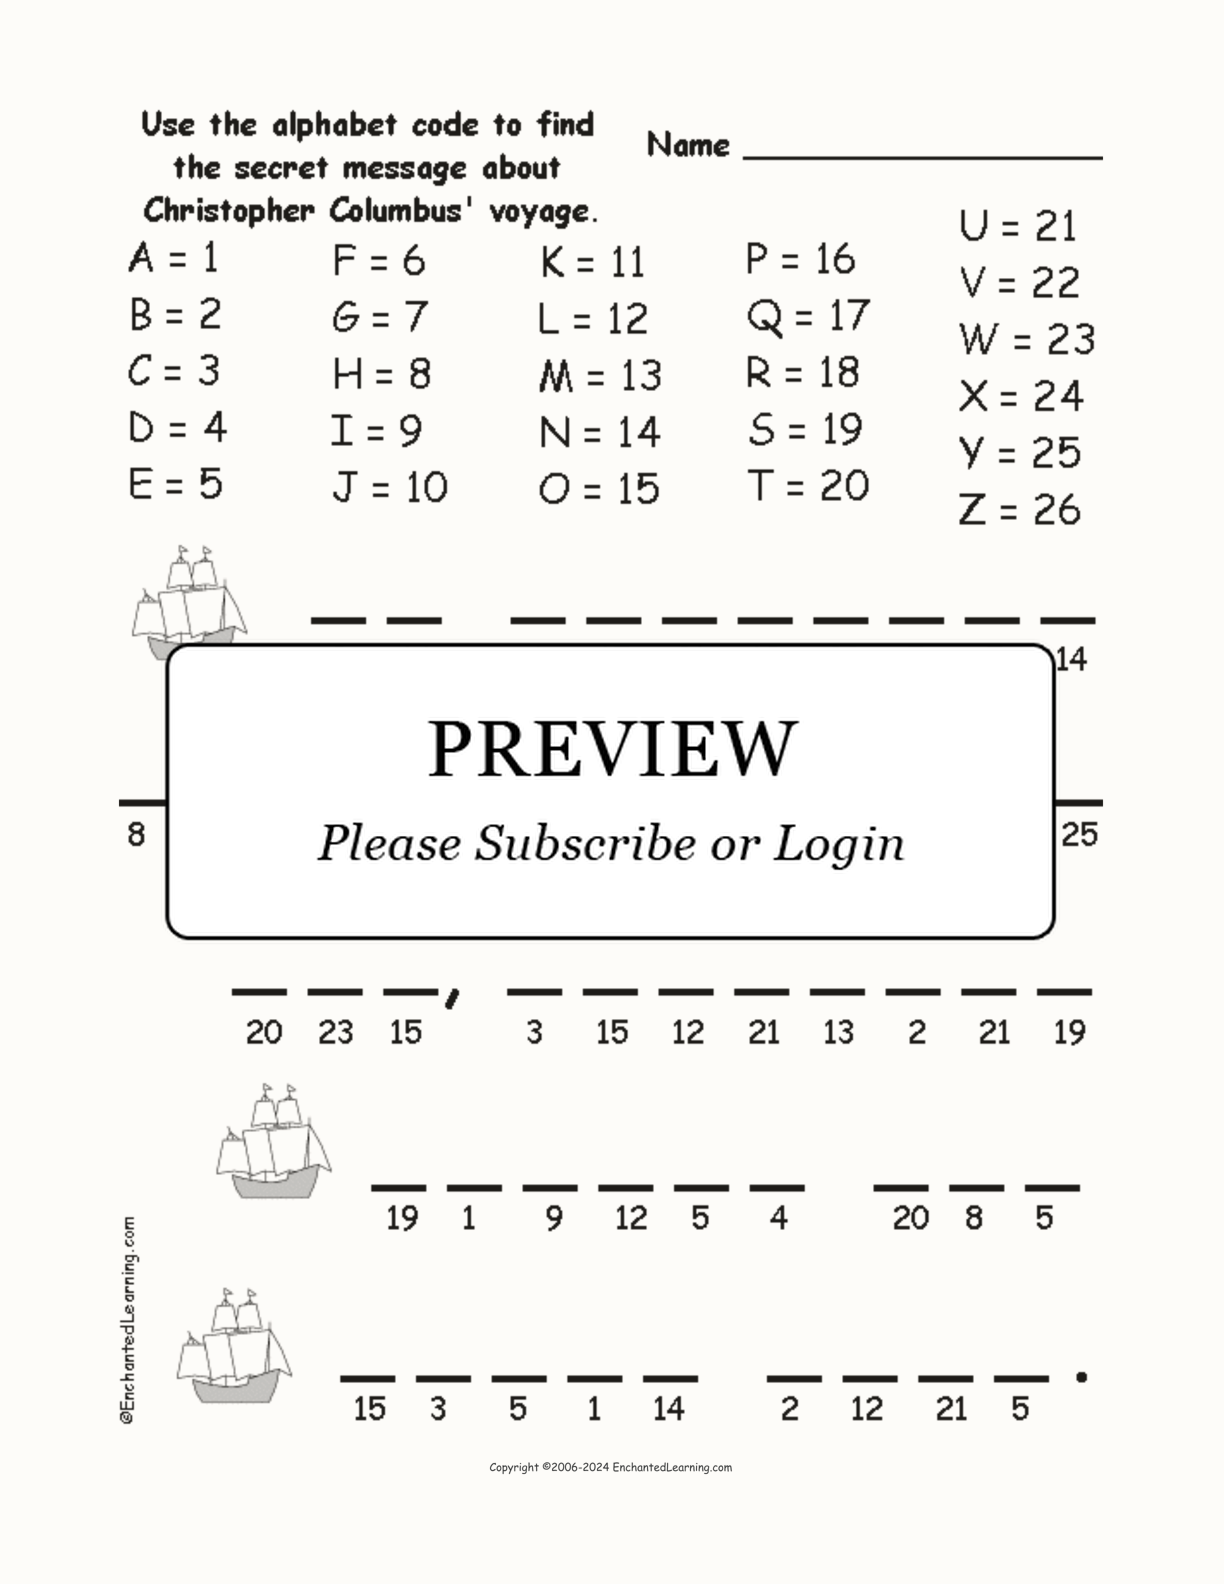 Columbus Day Alphabet Code interactive worksheet page 1